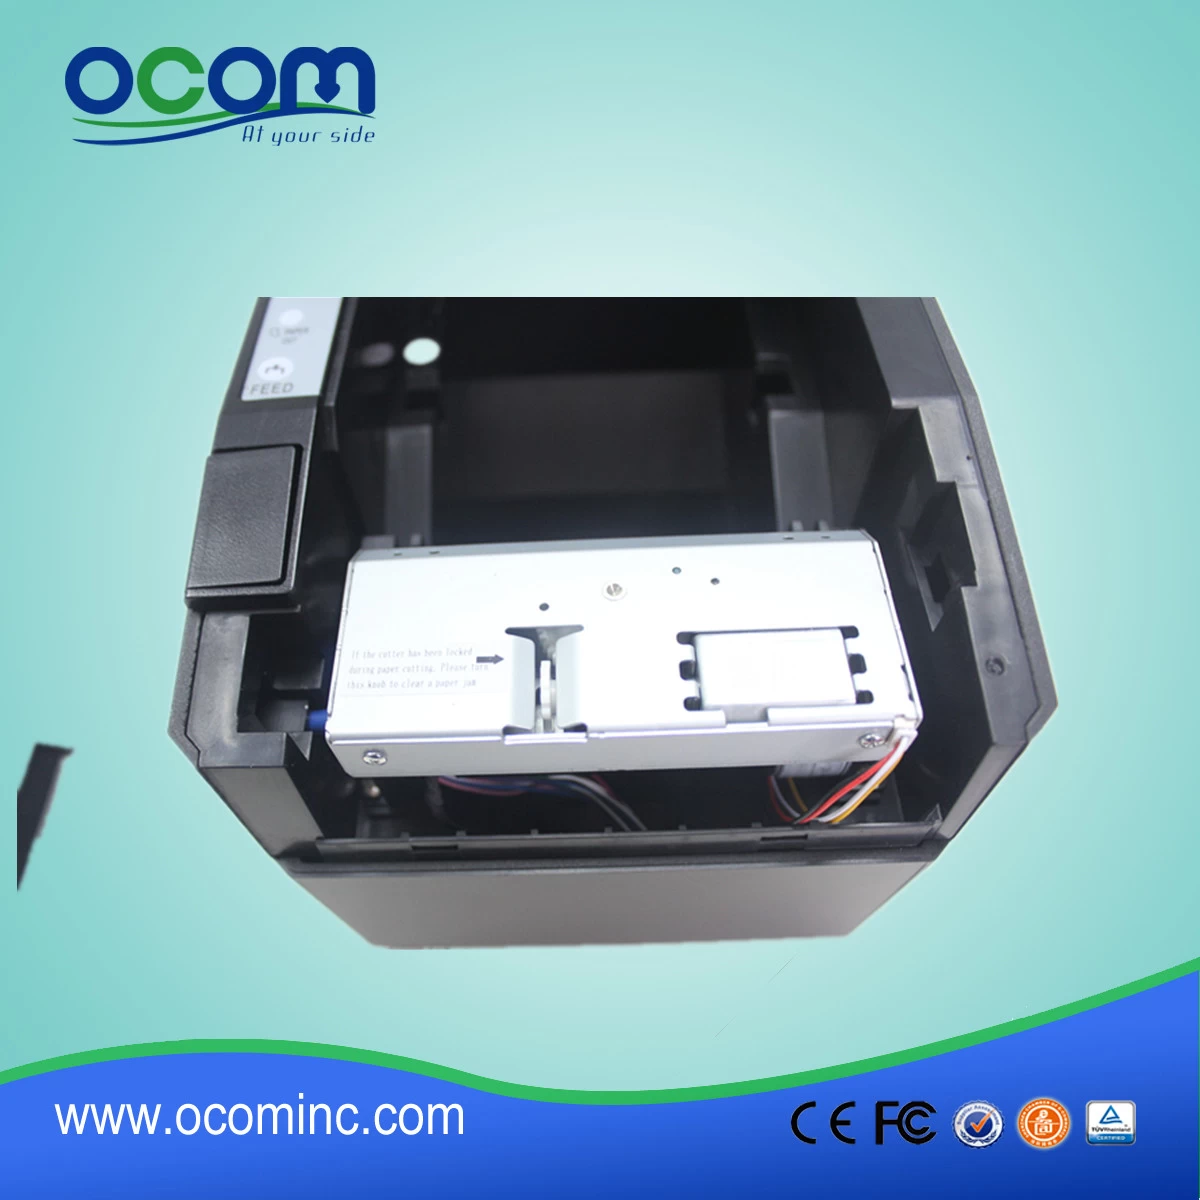 High-Quality 80mm High Speed Bluetooth POS Thermal Printer (OCPP-88A-BU)